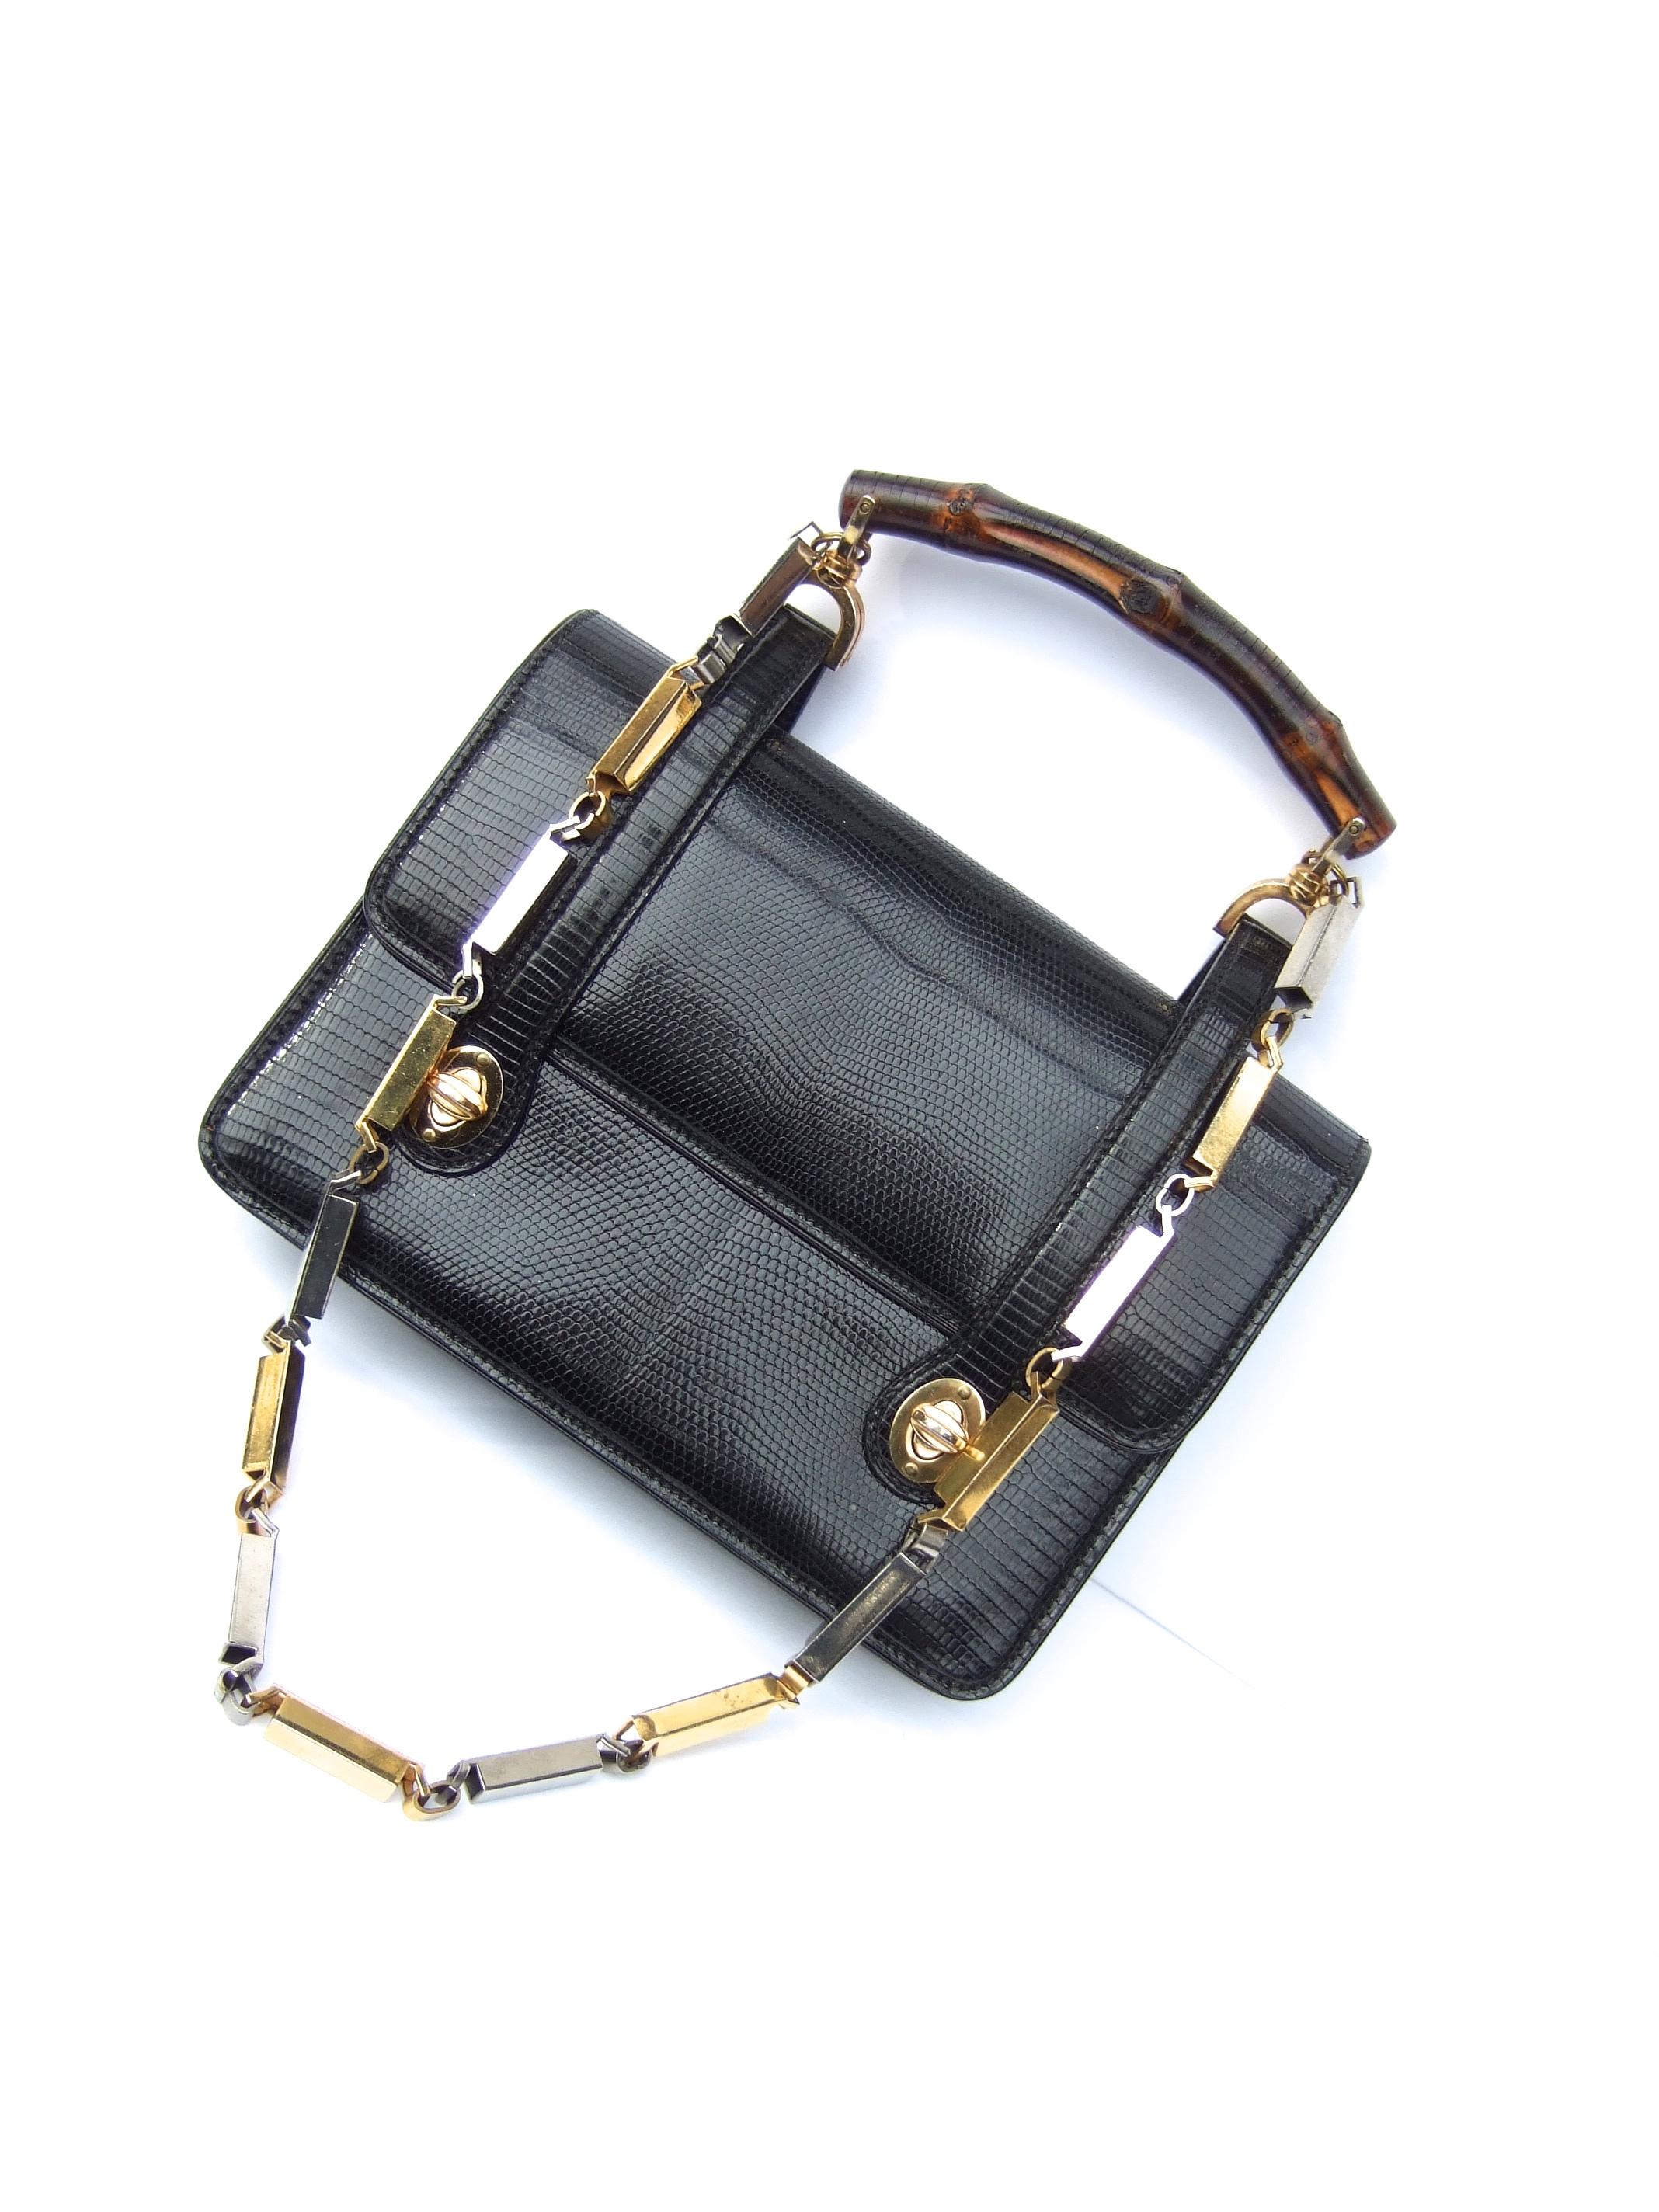 Women's Rare Gucci Italian Black Lizard Leather Handbag - Shoulder Bag c 1970s